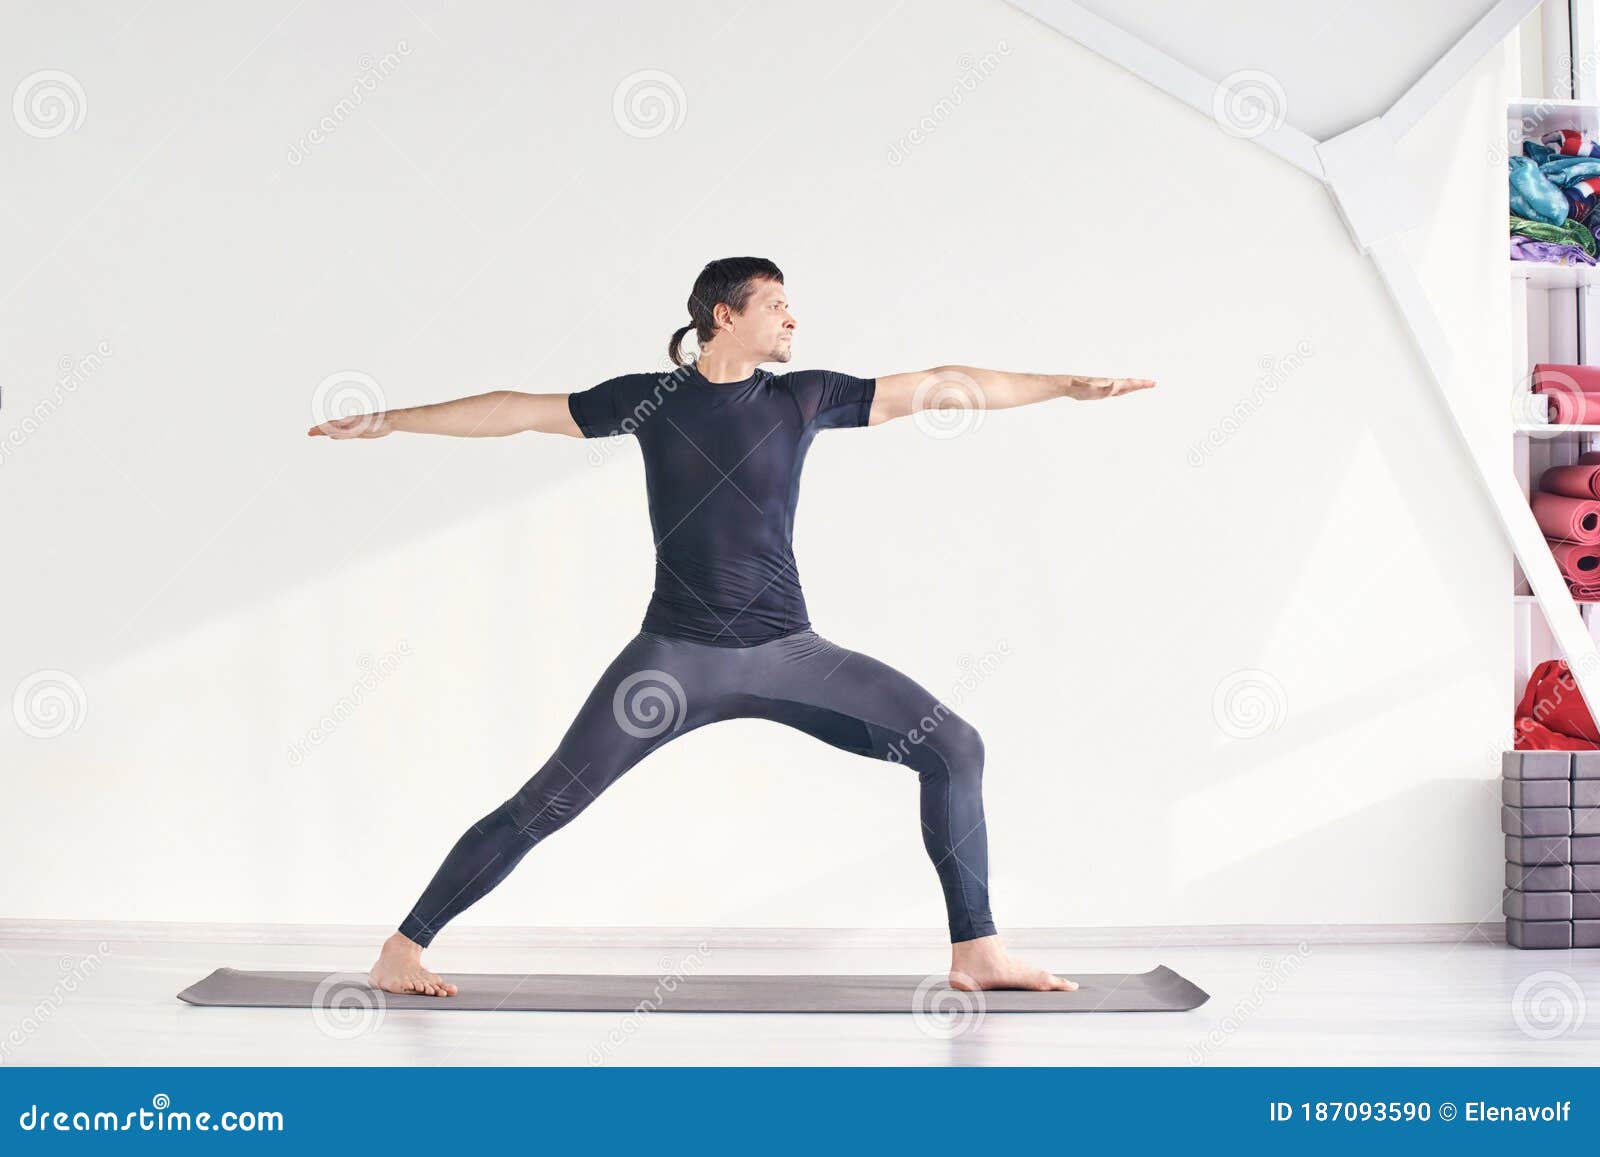 Fallen Warrior Yoga Pose  All Yoga Positions